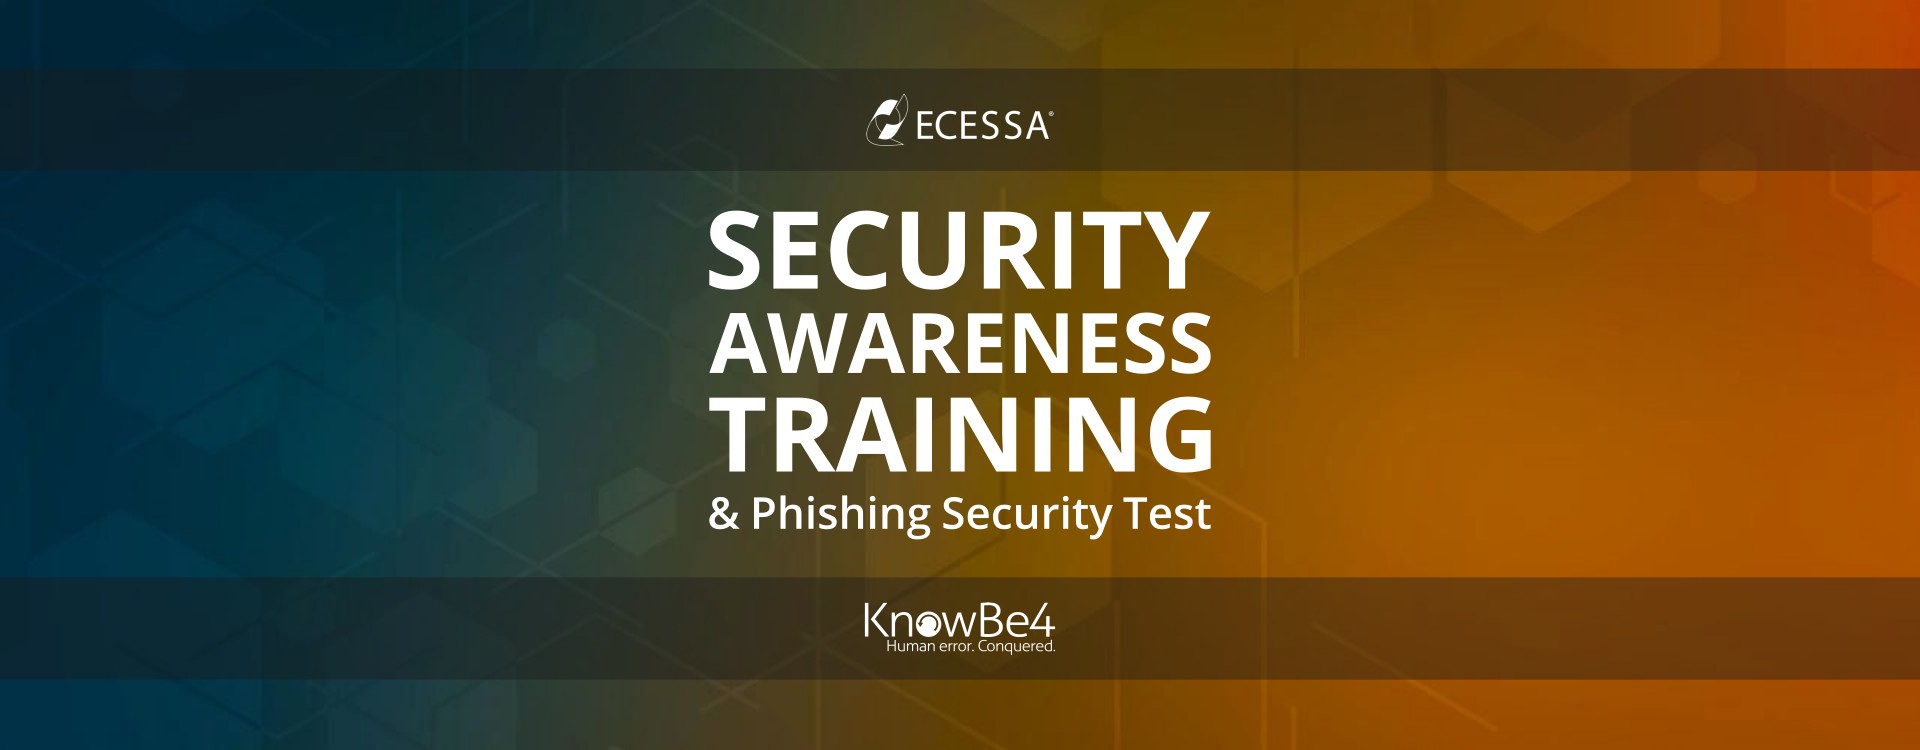 Ecessa KnowBe4 security awareness training banner